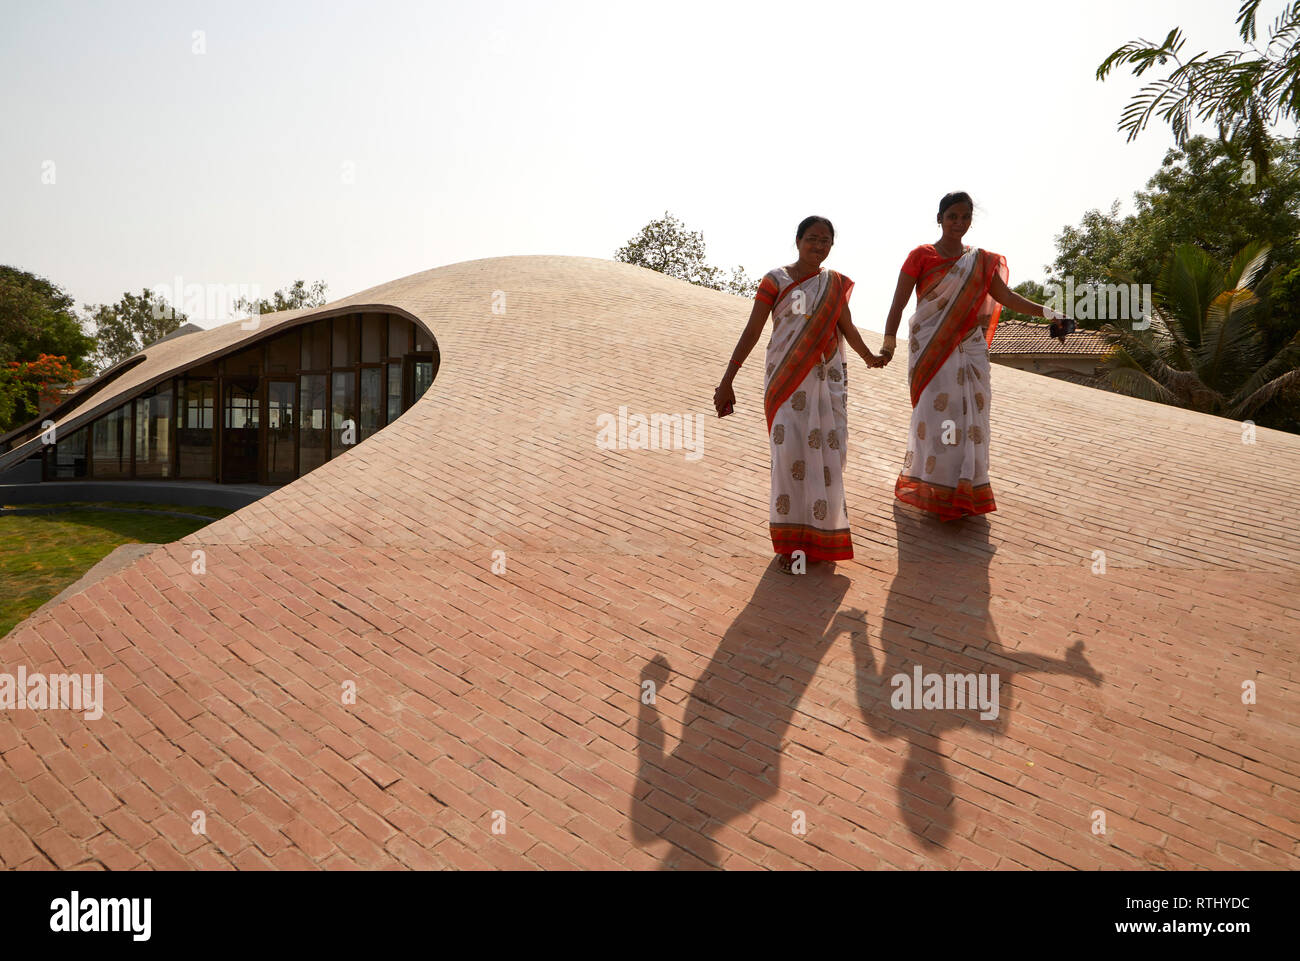 Teachers walk hand in hand on roof. Maya Somaiya Library, Kopargaon/Maharashtra, India. Architect: Sameep Padora and associates (SP+A), 2018. Stock Photo